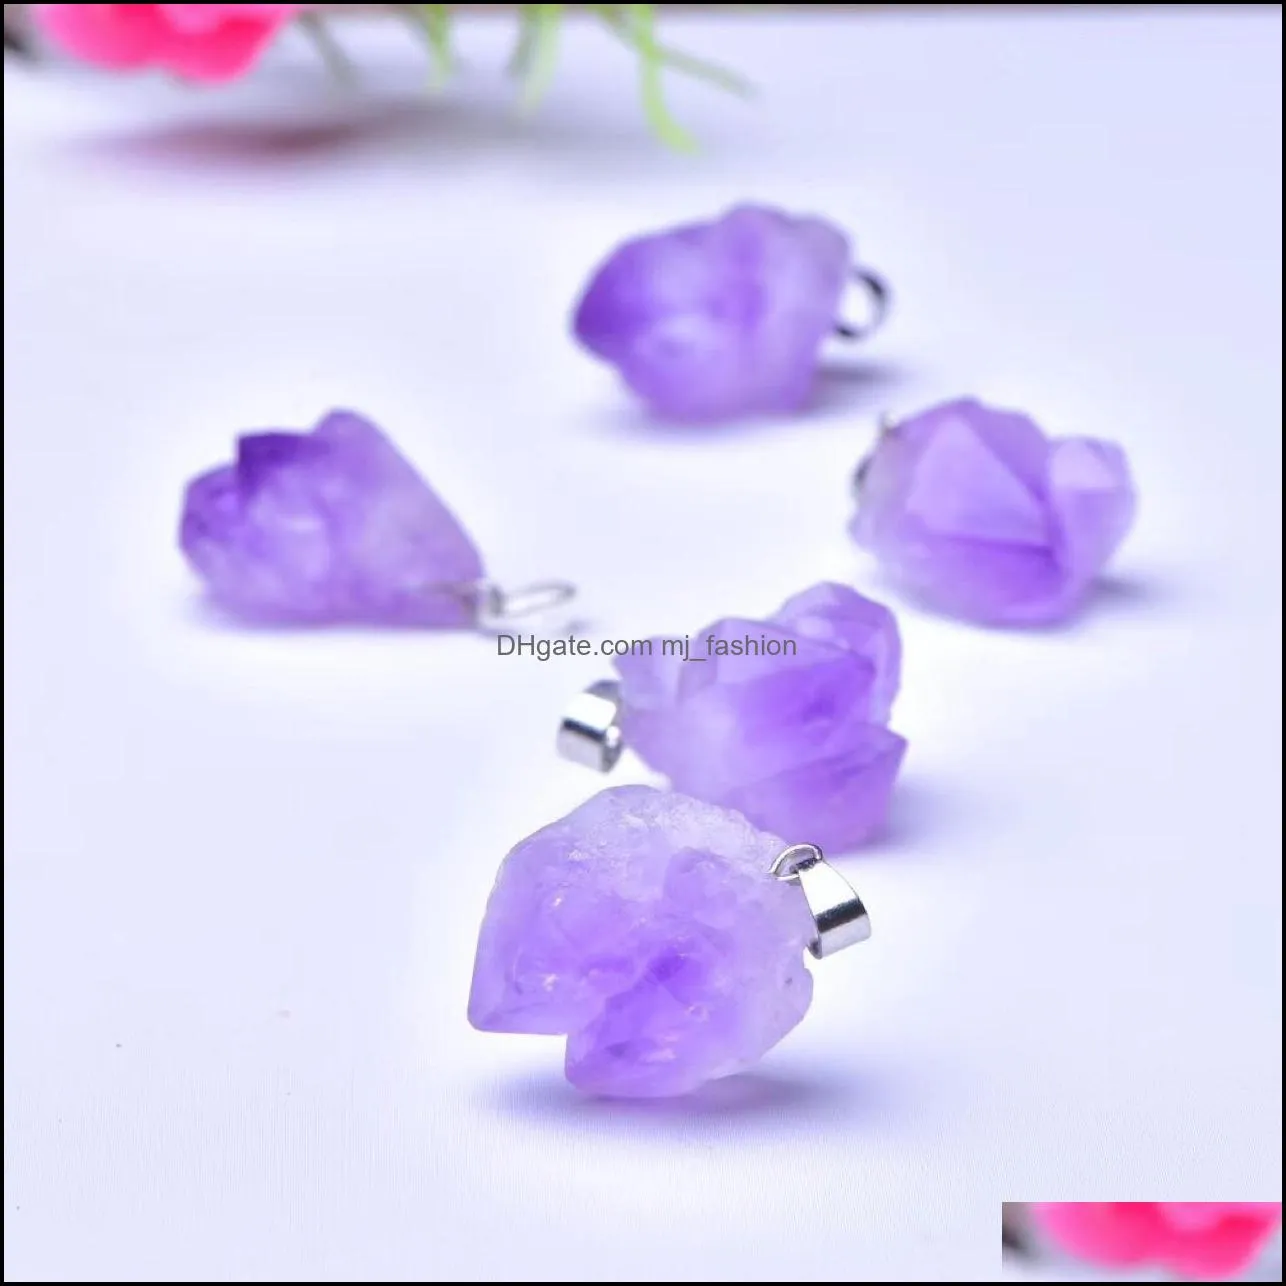 fashion natural stone irregular amethyst crystal pendant necklace for women jewelr mjfashion